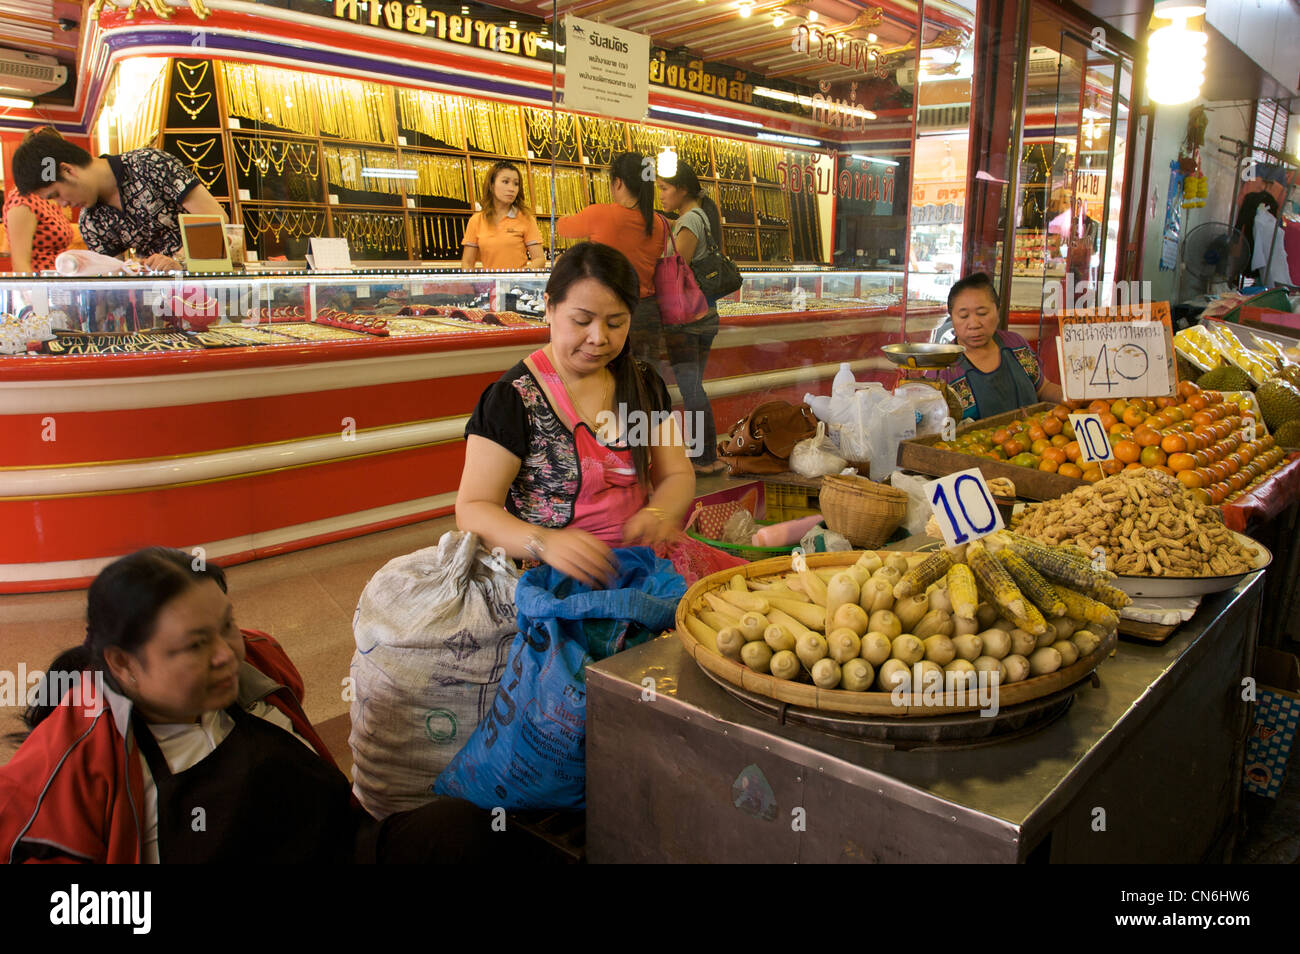 Almacén de maíz dulce, enfrente de la tienda del oro, Kad luang mercado,Chiang Mai, Tailandia Foto de stock